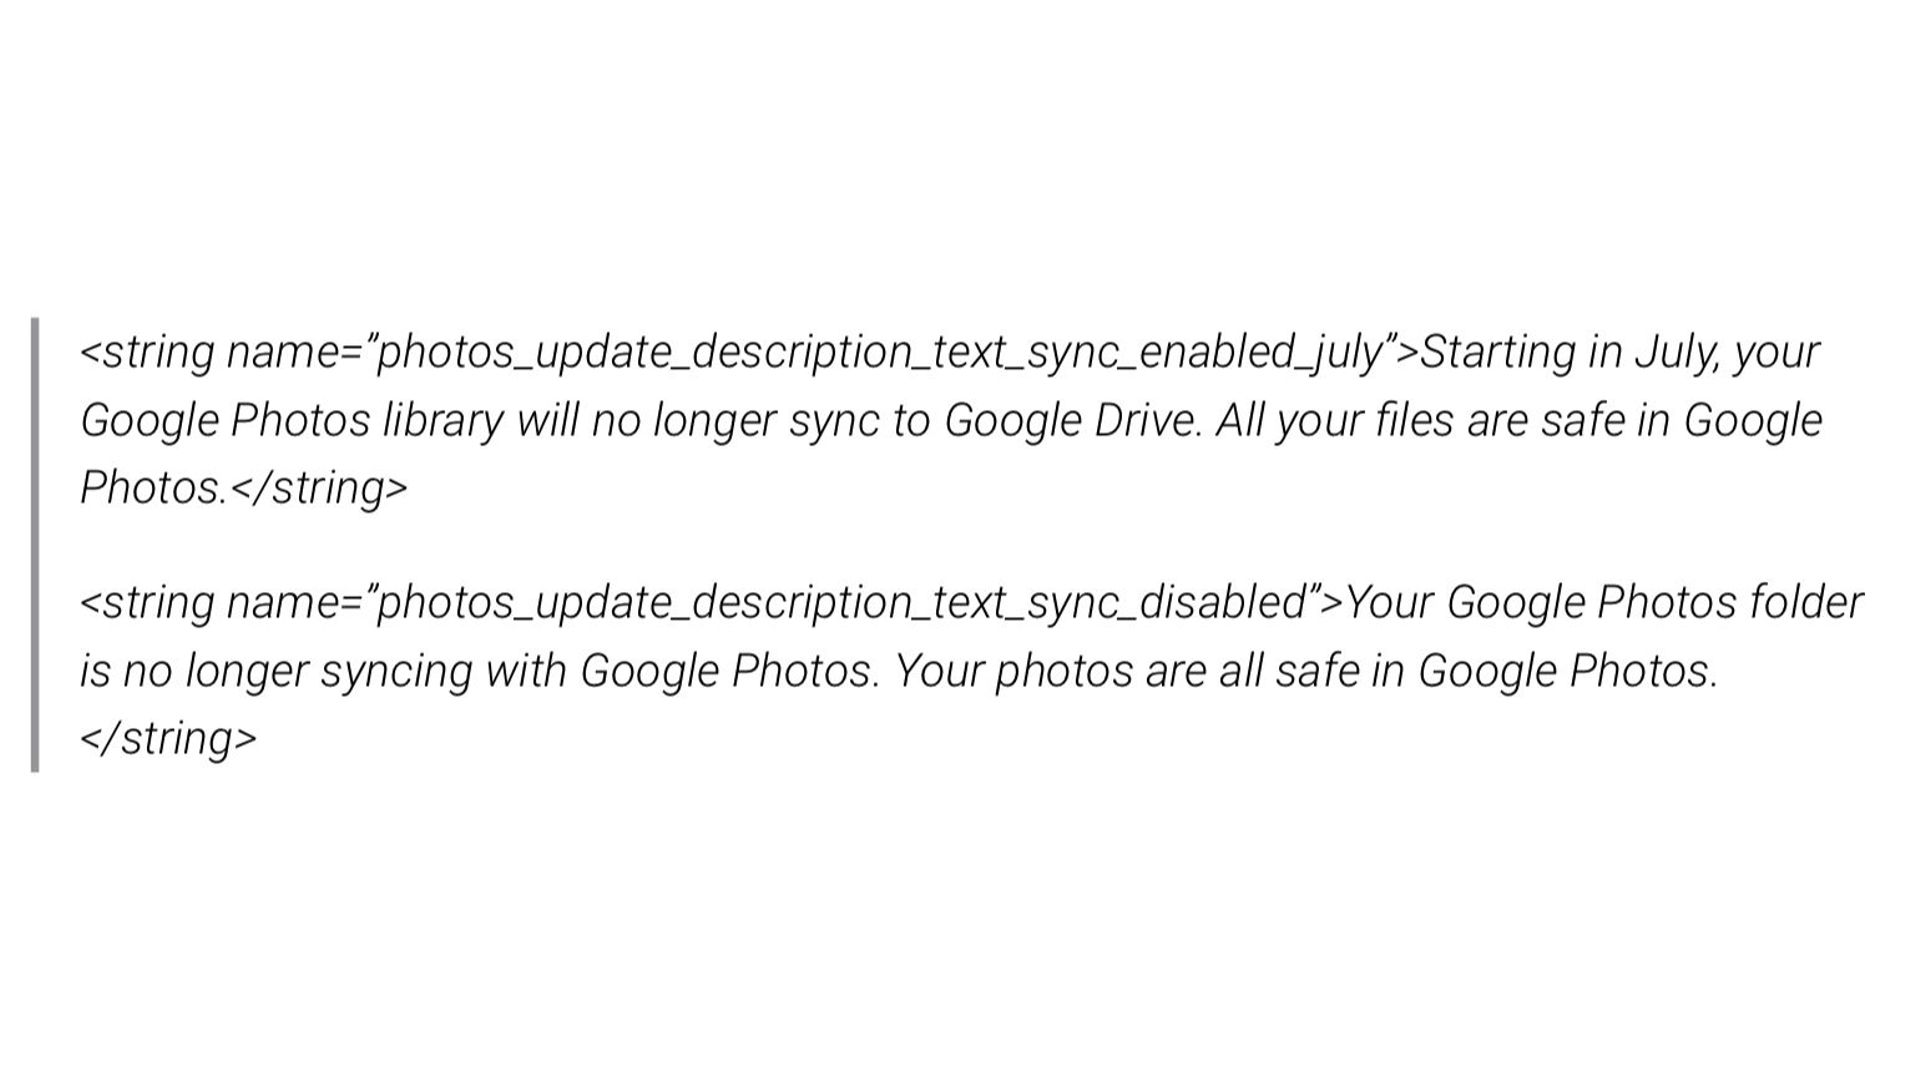 Google ne synchronisera plus vos photos entre Google Drive et Google Photos